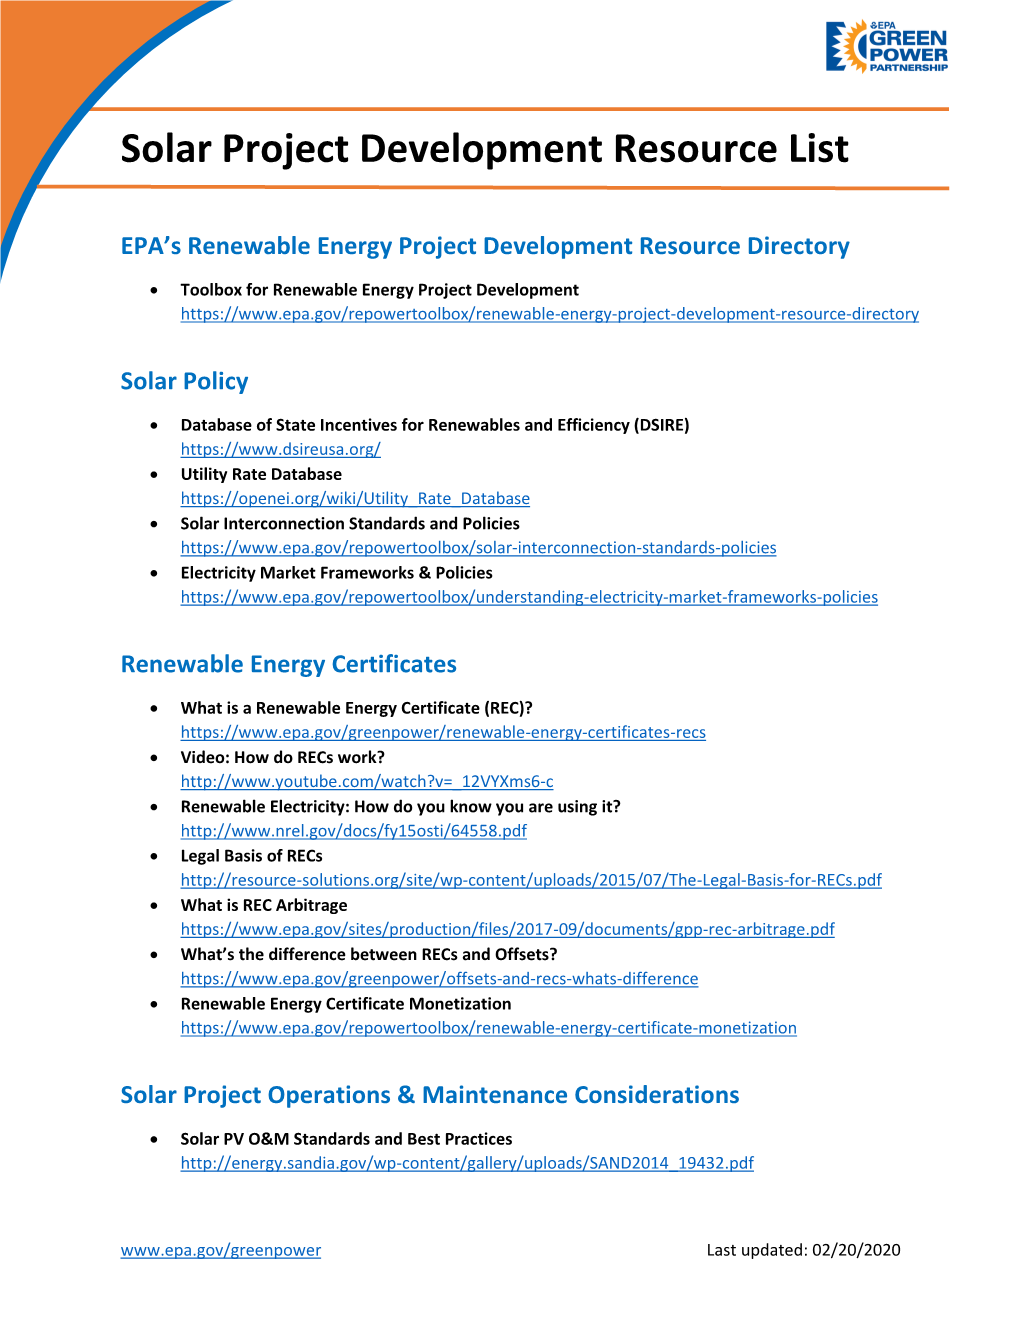 Solar Project Development Resource List (PDF)